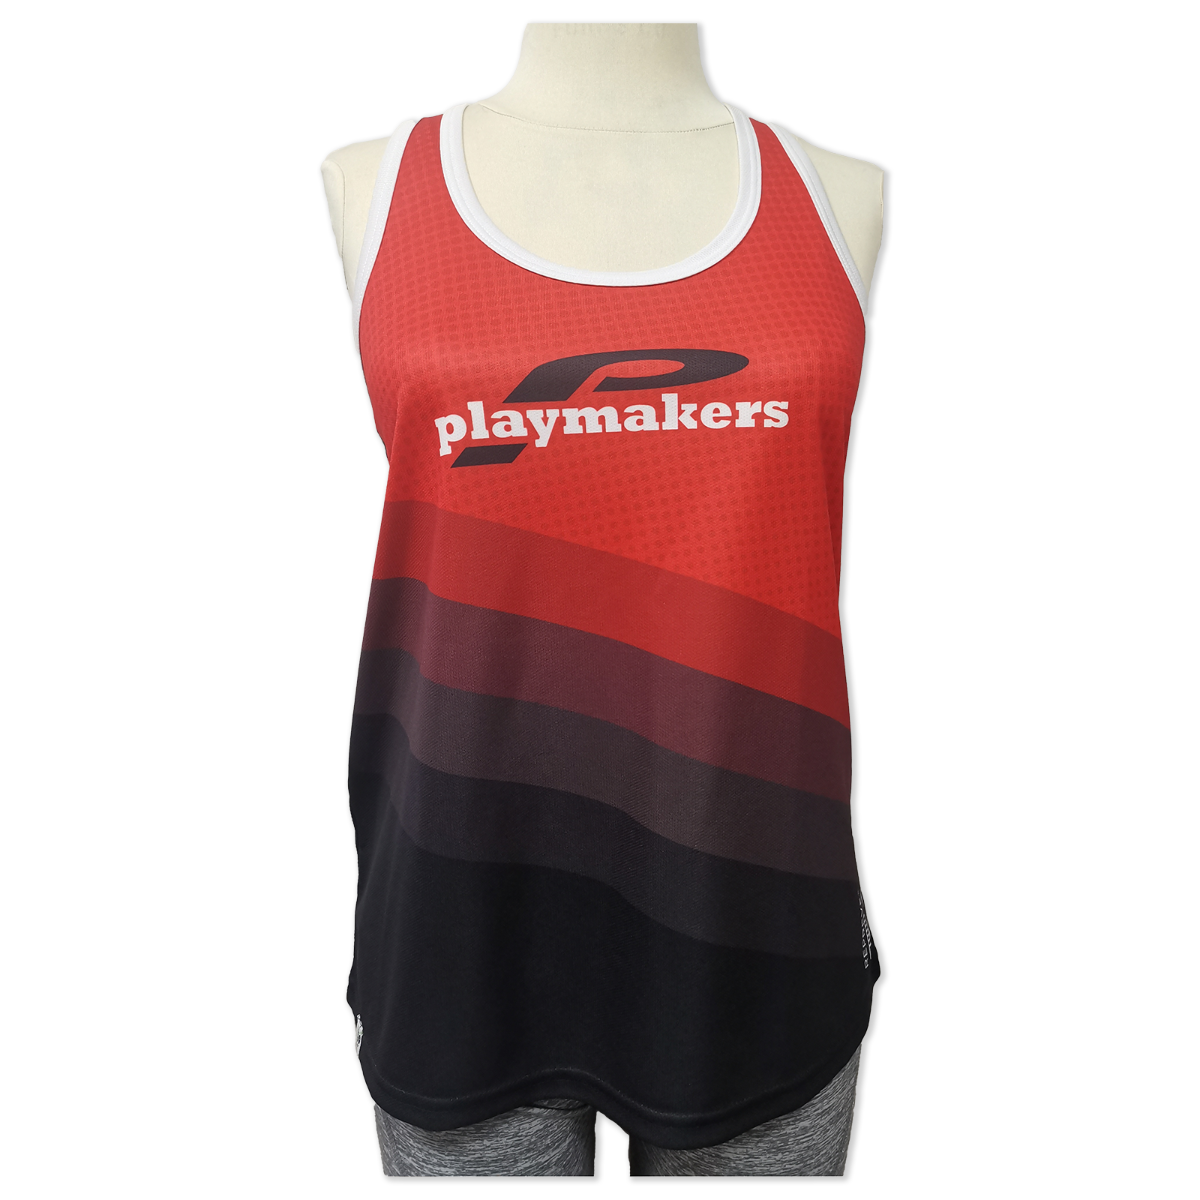 Playmakers Singlet